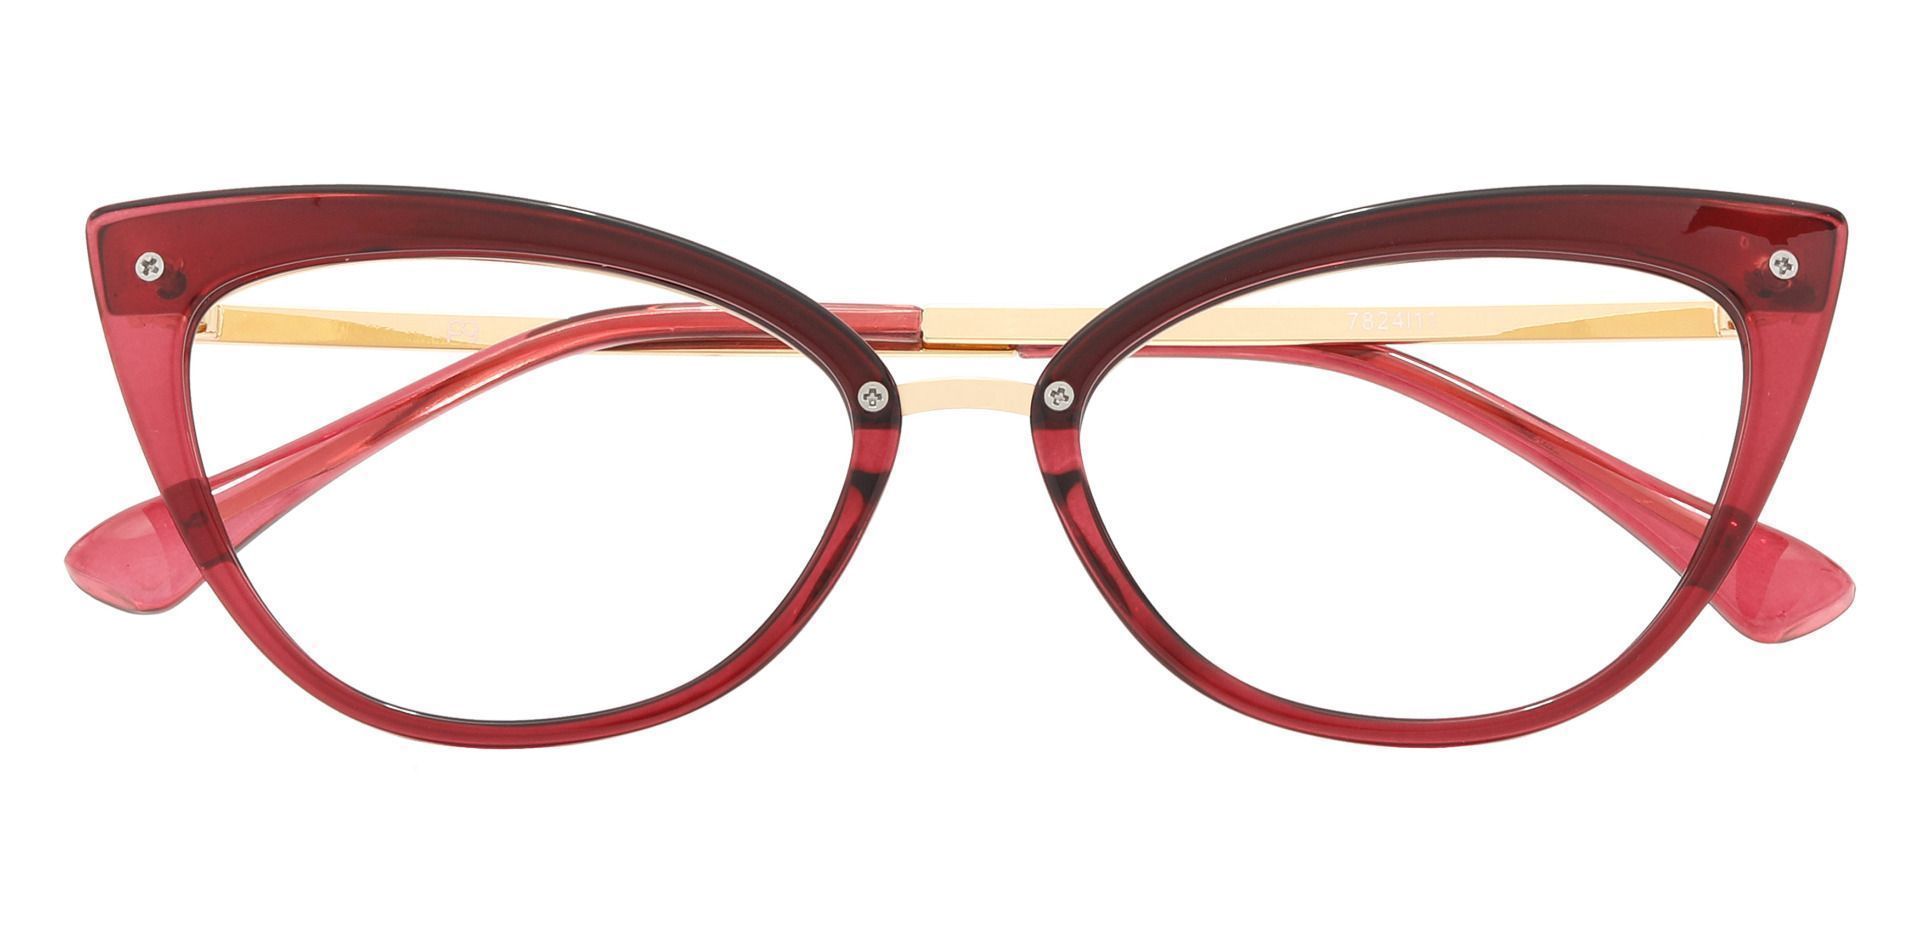 Glenda Cat Eye Prescription Glasses - Red